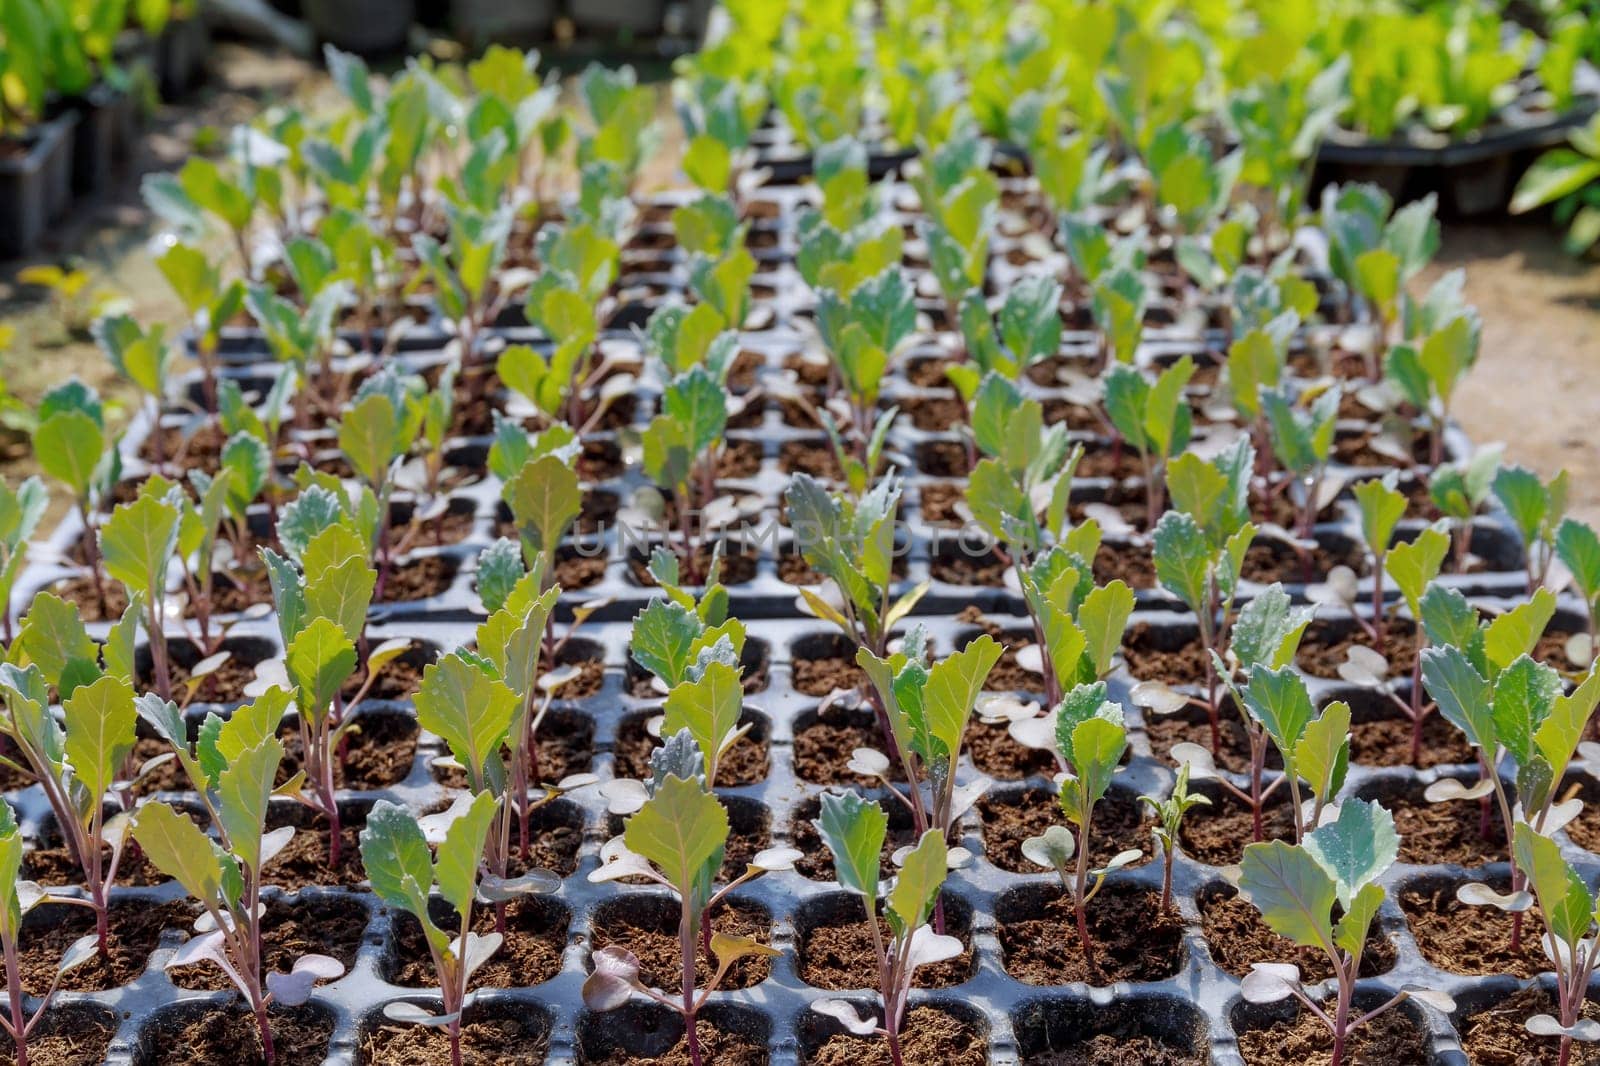 Seedlings of cabbage, broccoli or cauliflower, seedlings growing in a greenhouse.